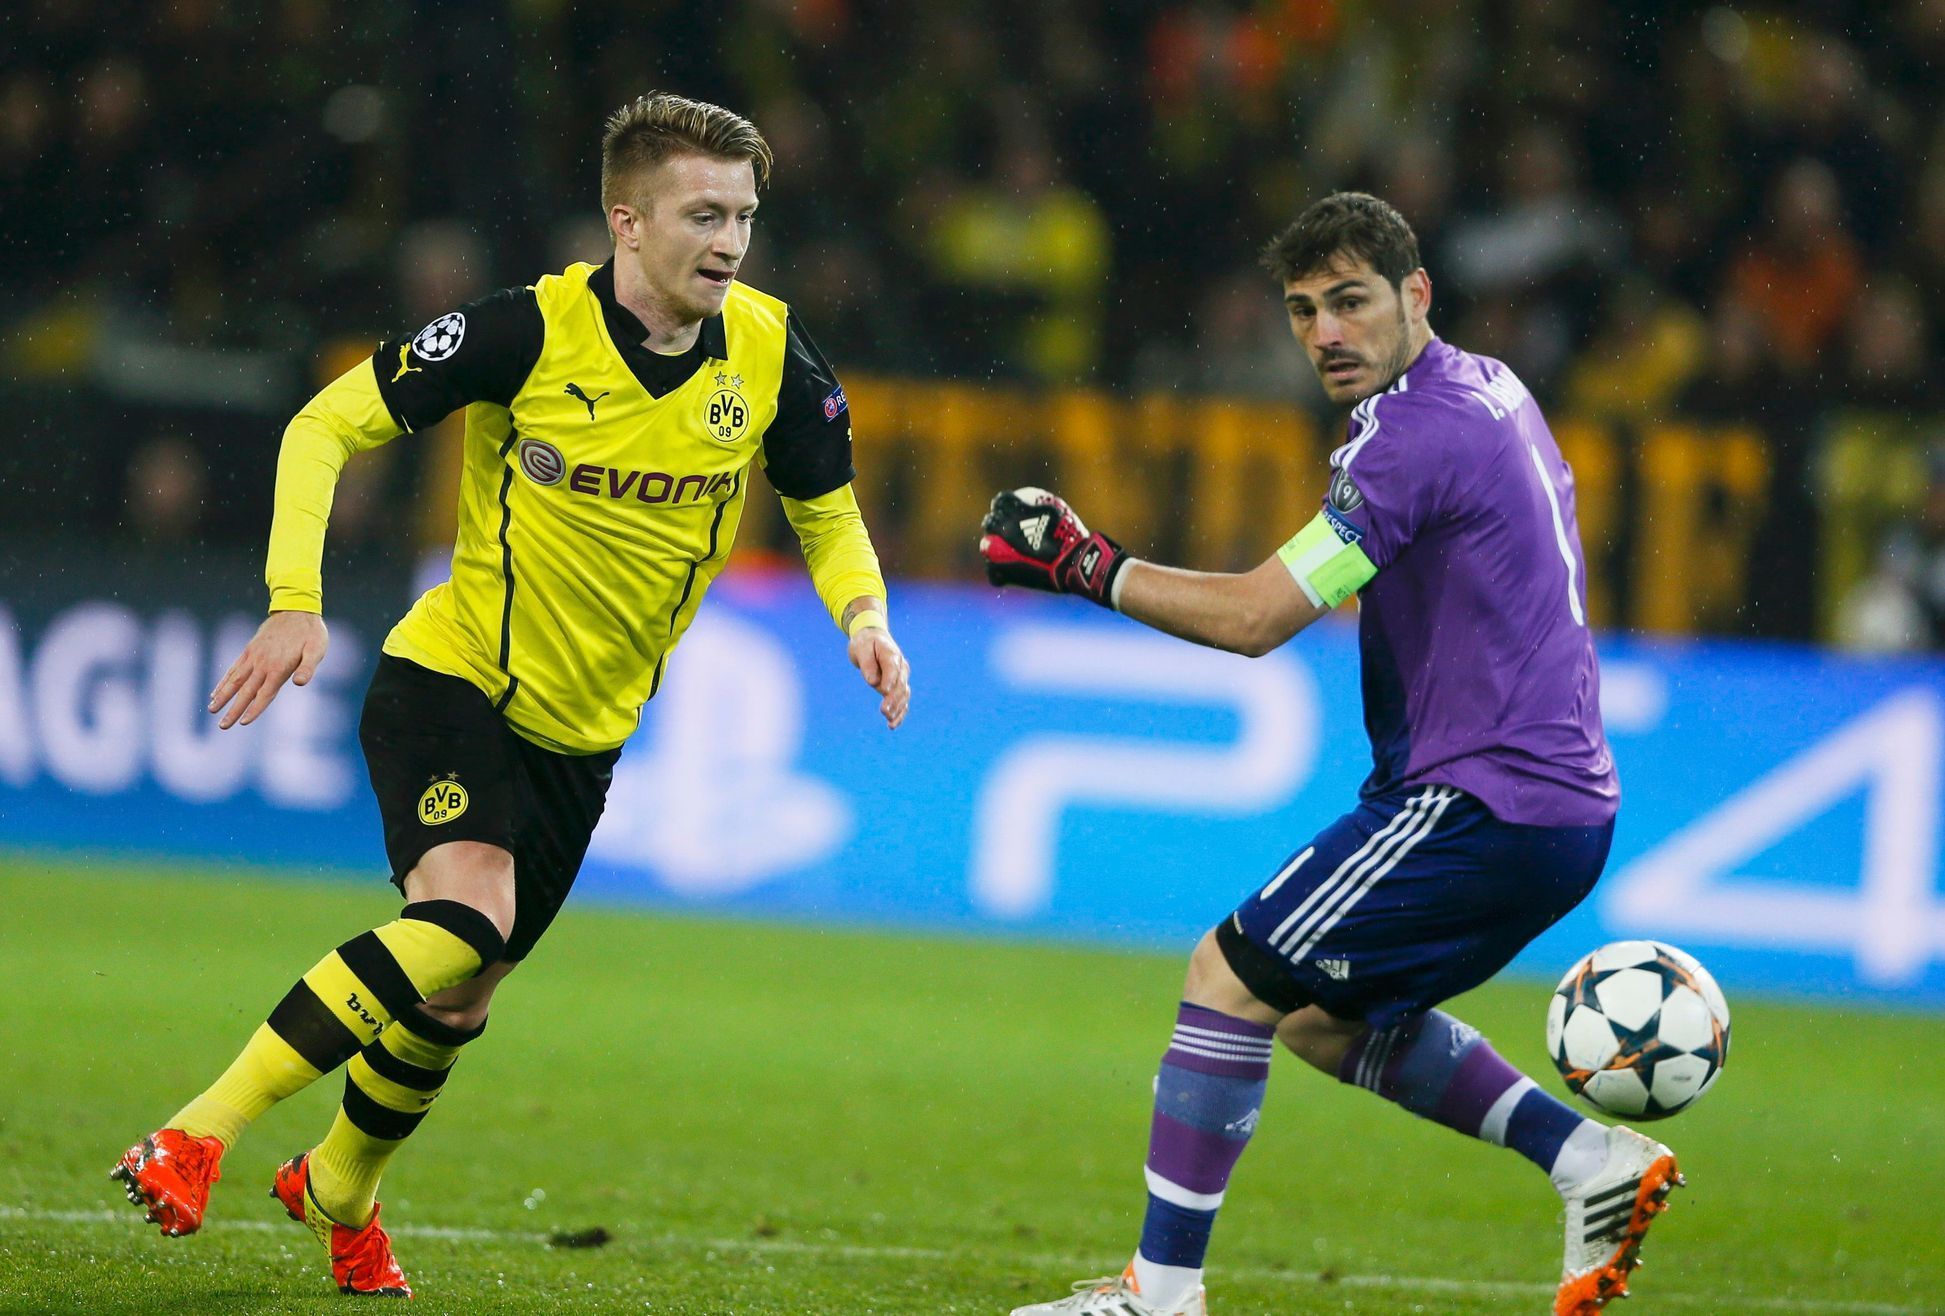 Borussia Dortmund vs. Real Madrid